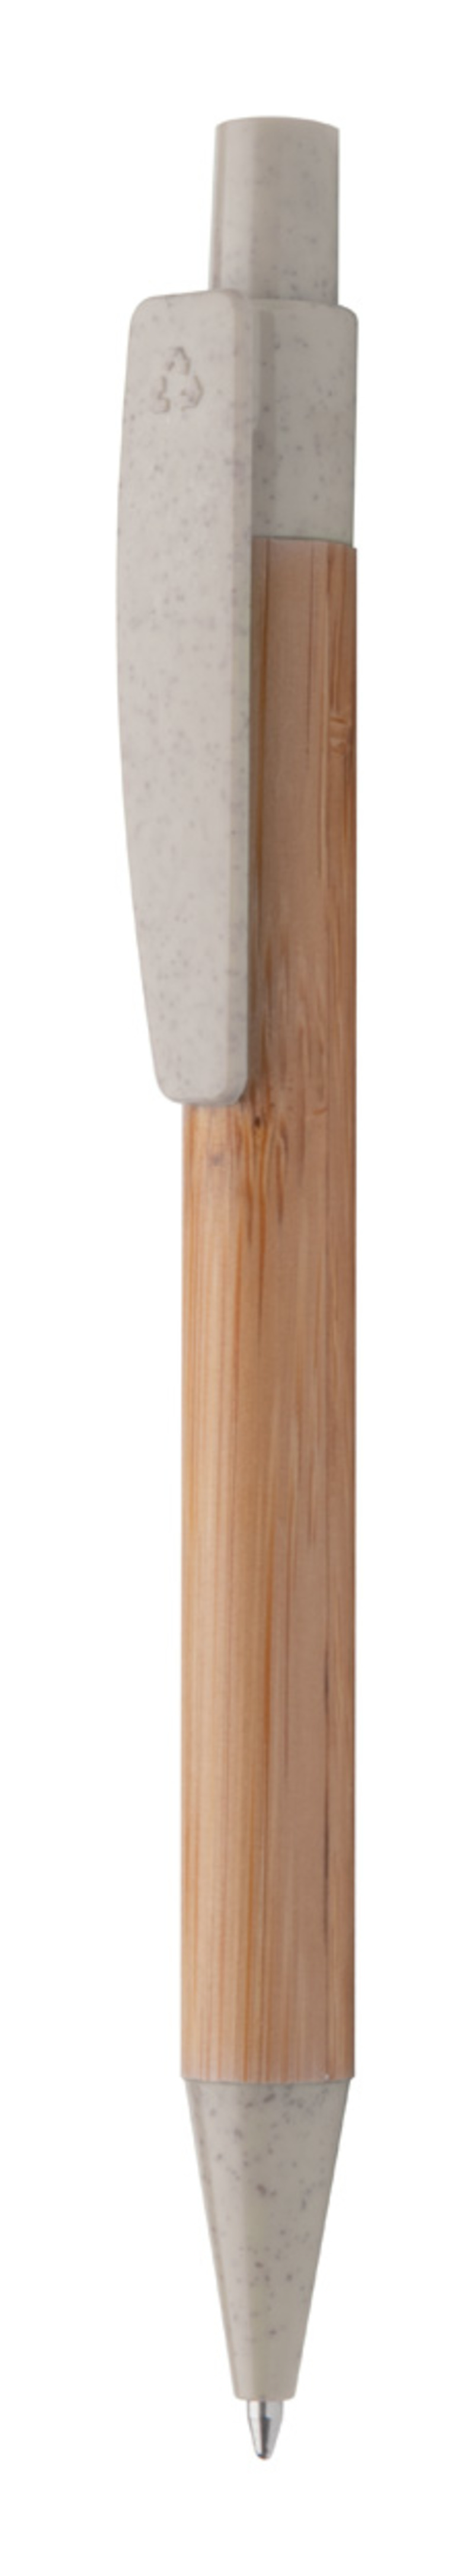 Boothic bamboo ballpoint pen